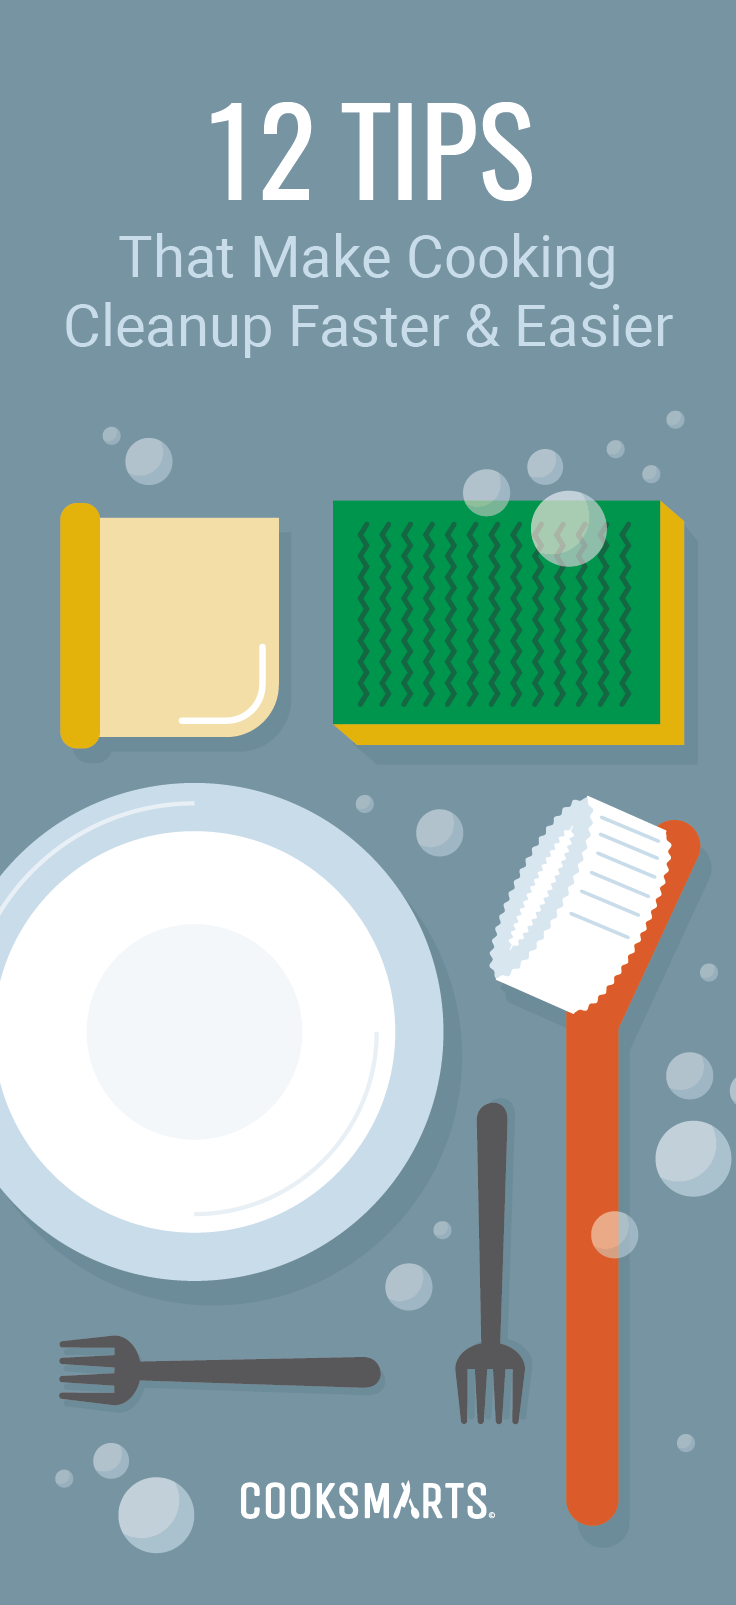 12 Tips That Make Cooking Cleanup Faster & Easier via @cooksmarts